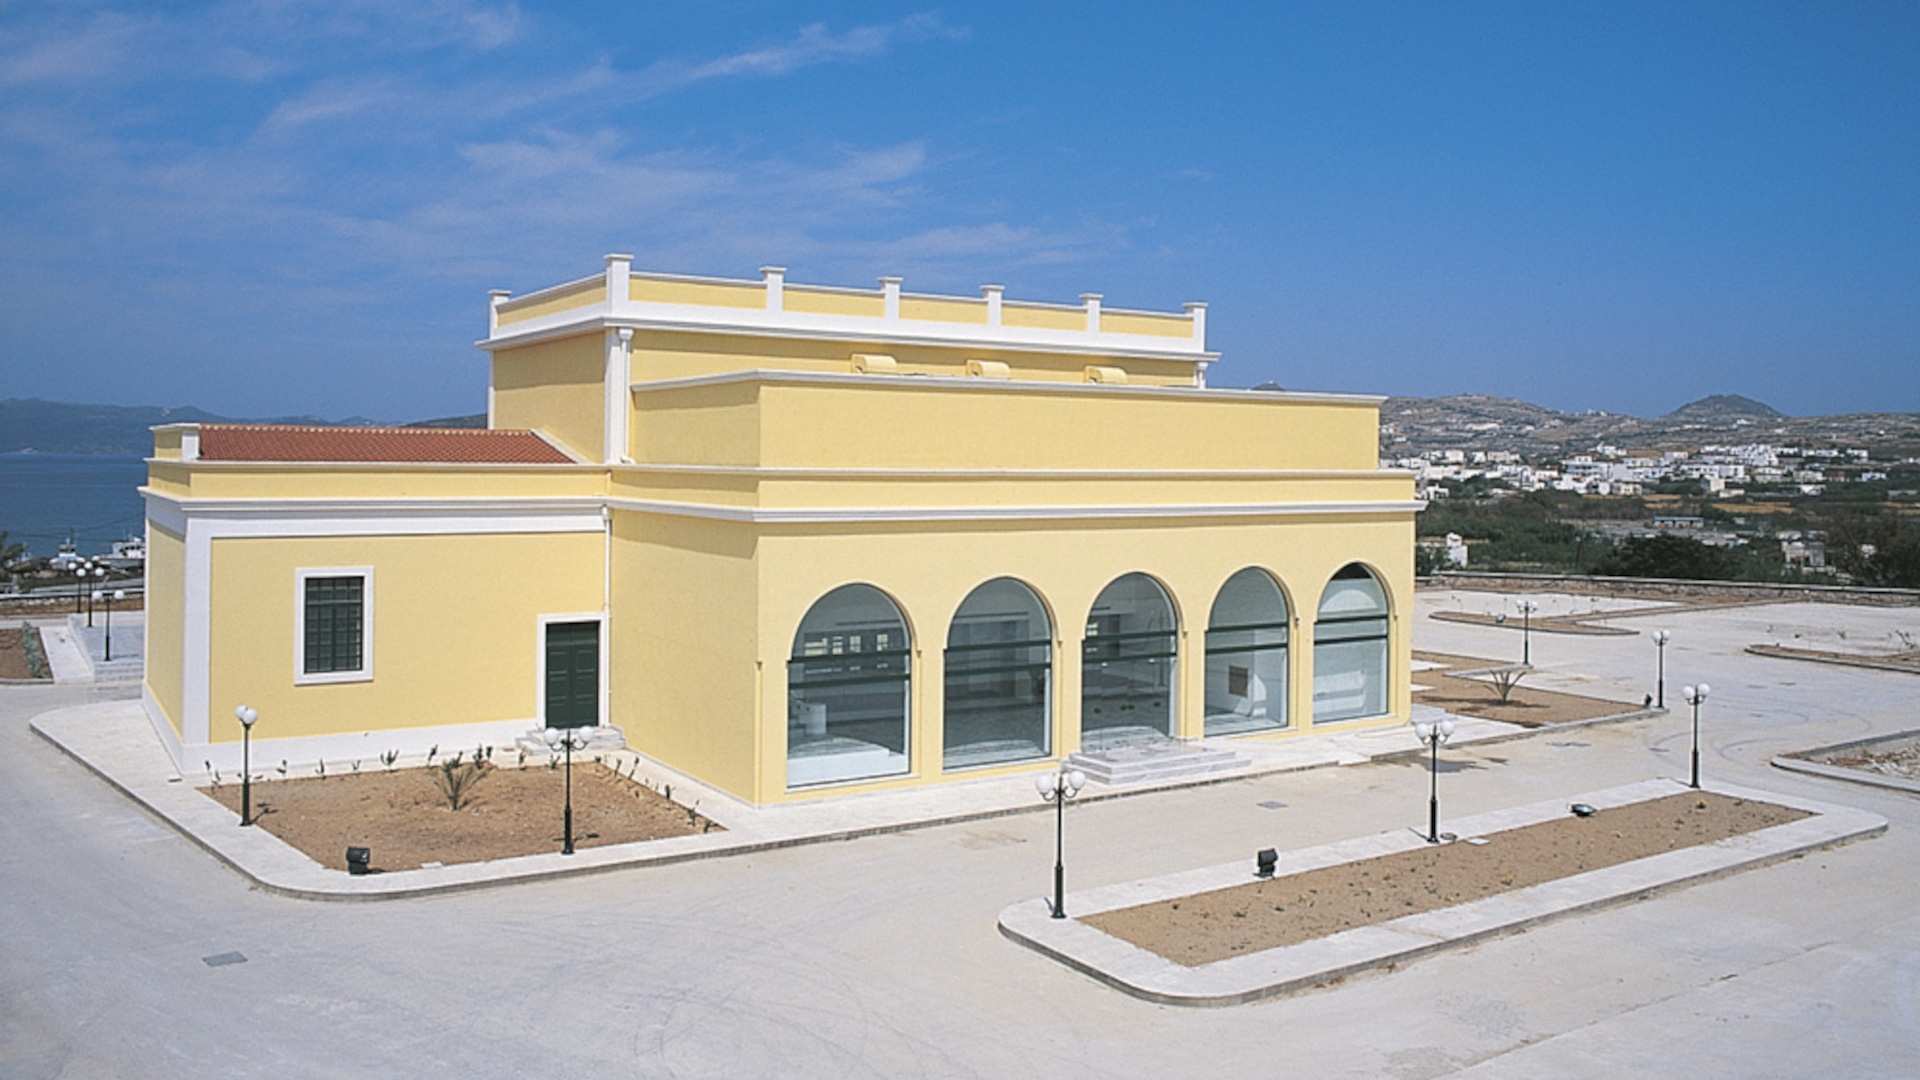 The Milos Conference Centre